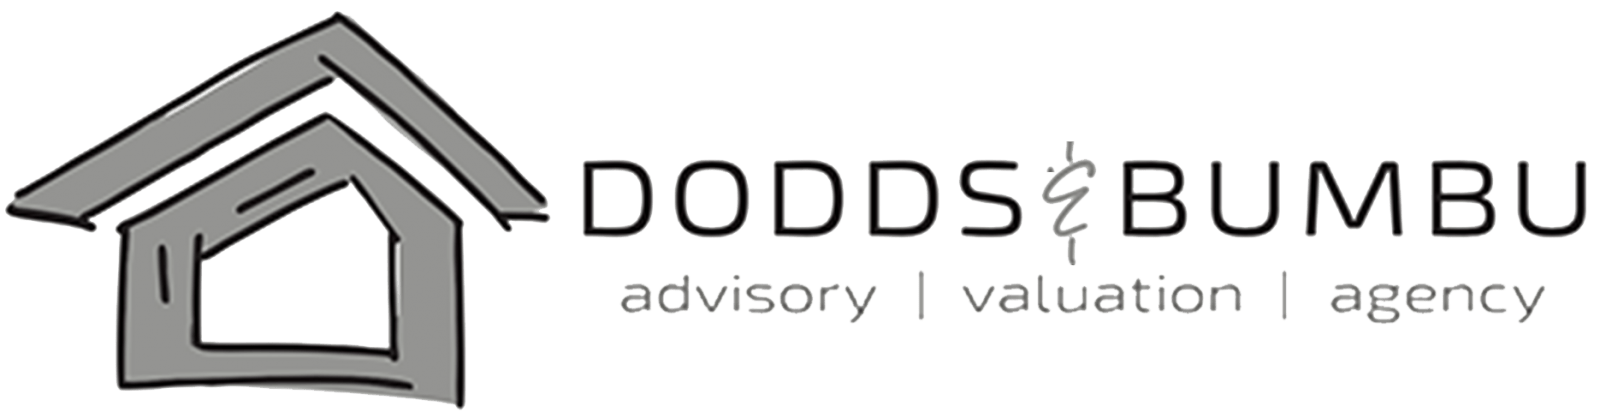 Dodds & Bumbu | Advisory Valuation Agency